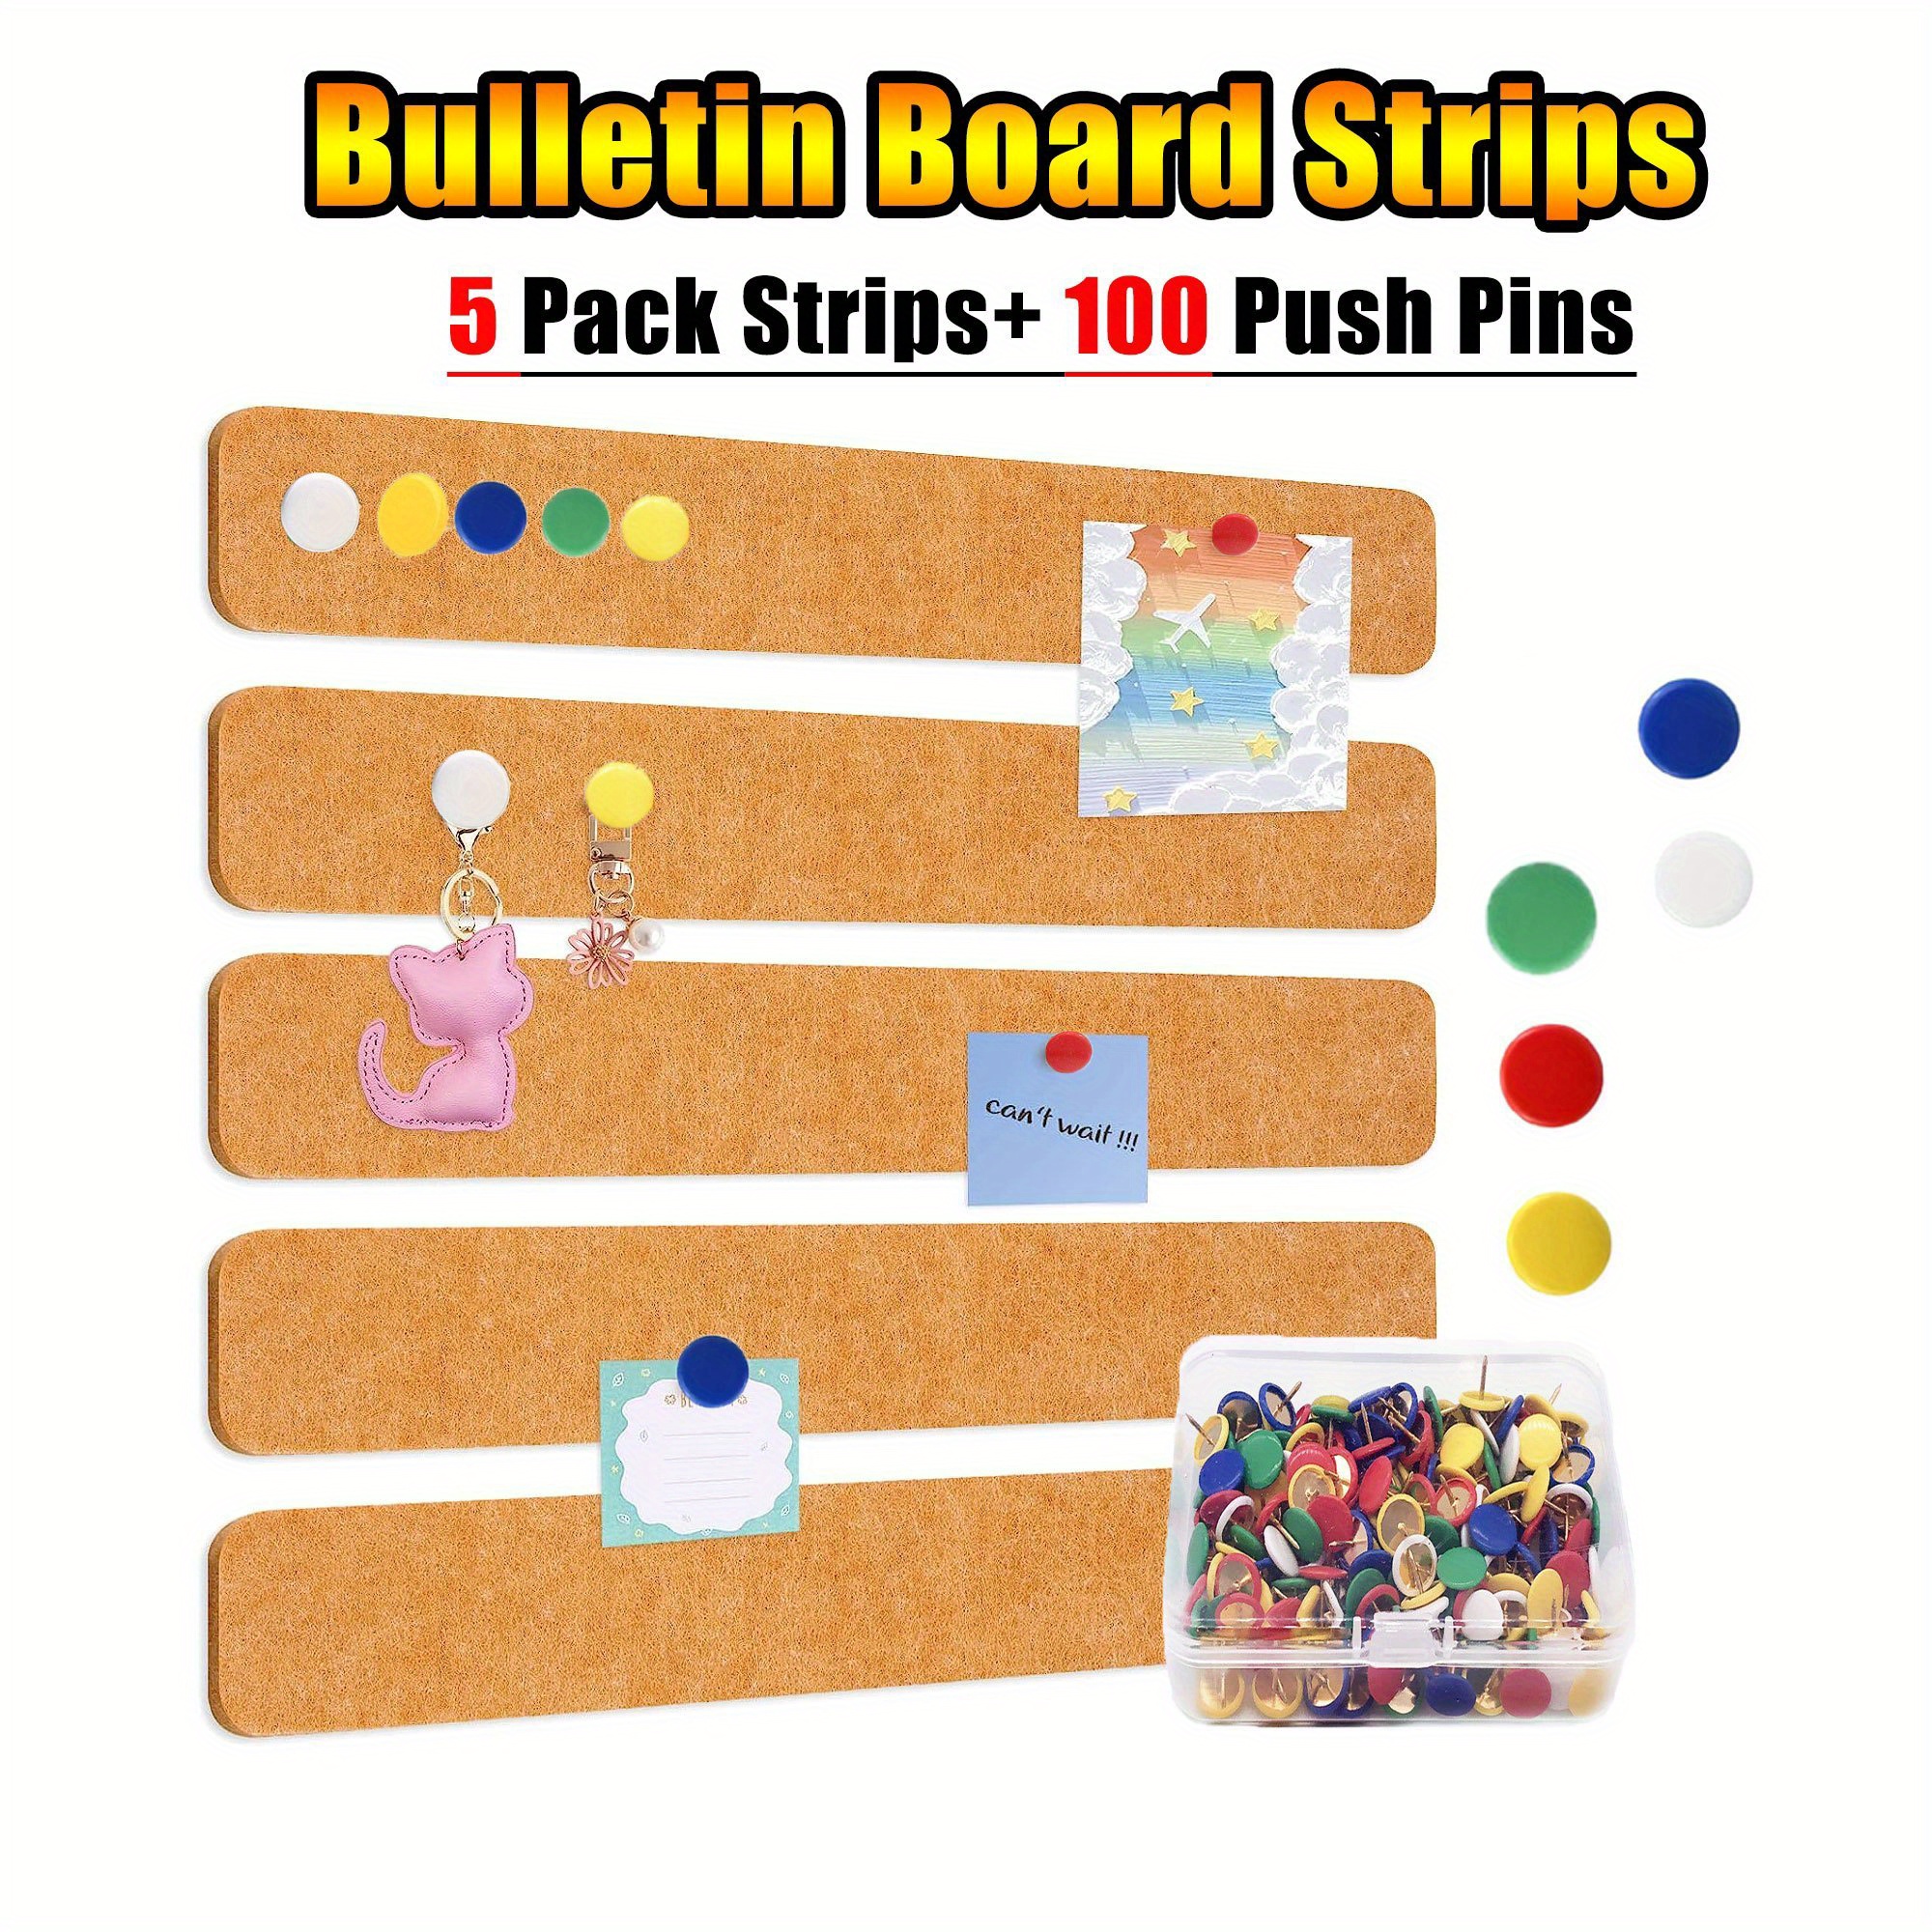 6pcs Felt Board Tiles, Hexagon Bulletin Board, Self Adhesive Pin Board For  Wall Decor, Memo Board Notice Board For Classroom,Office ,Home